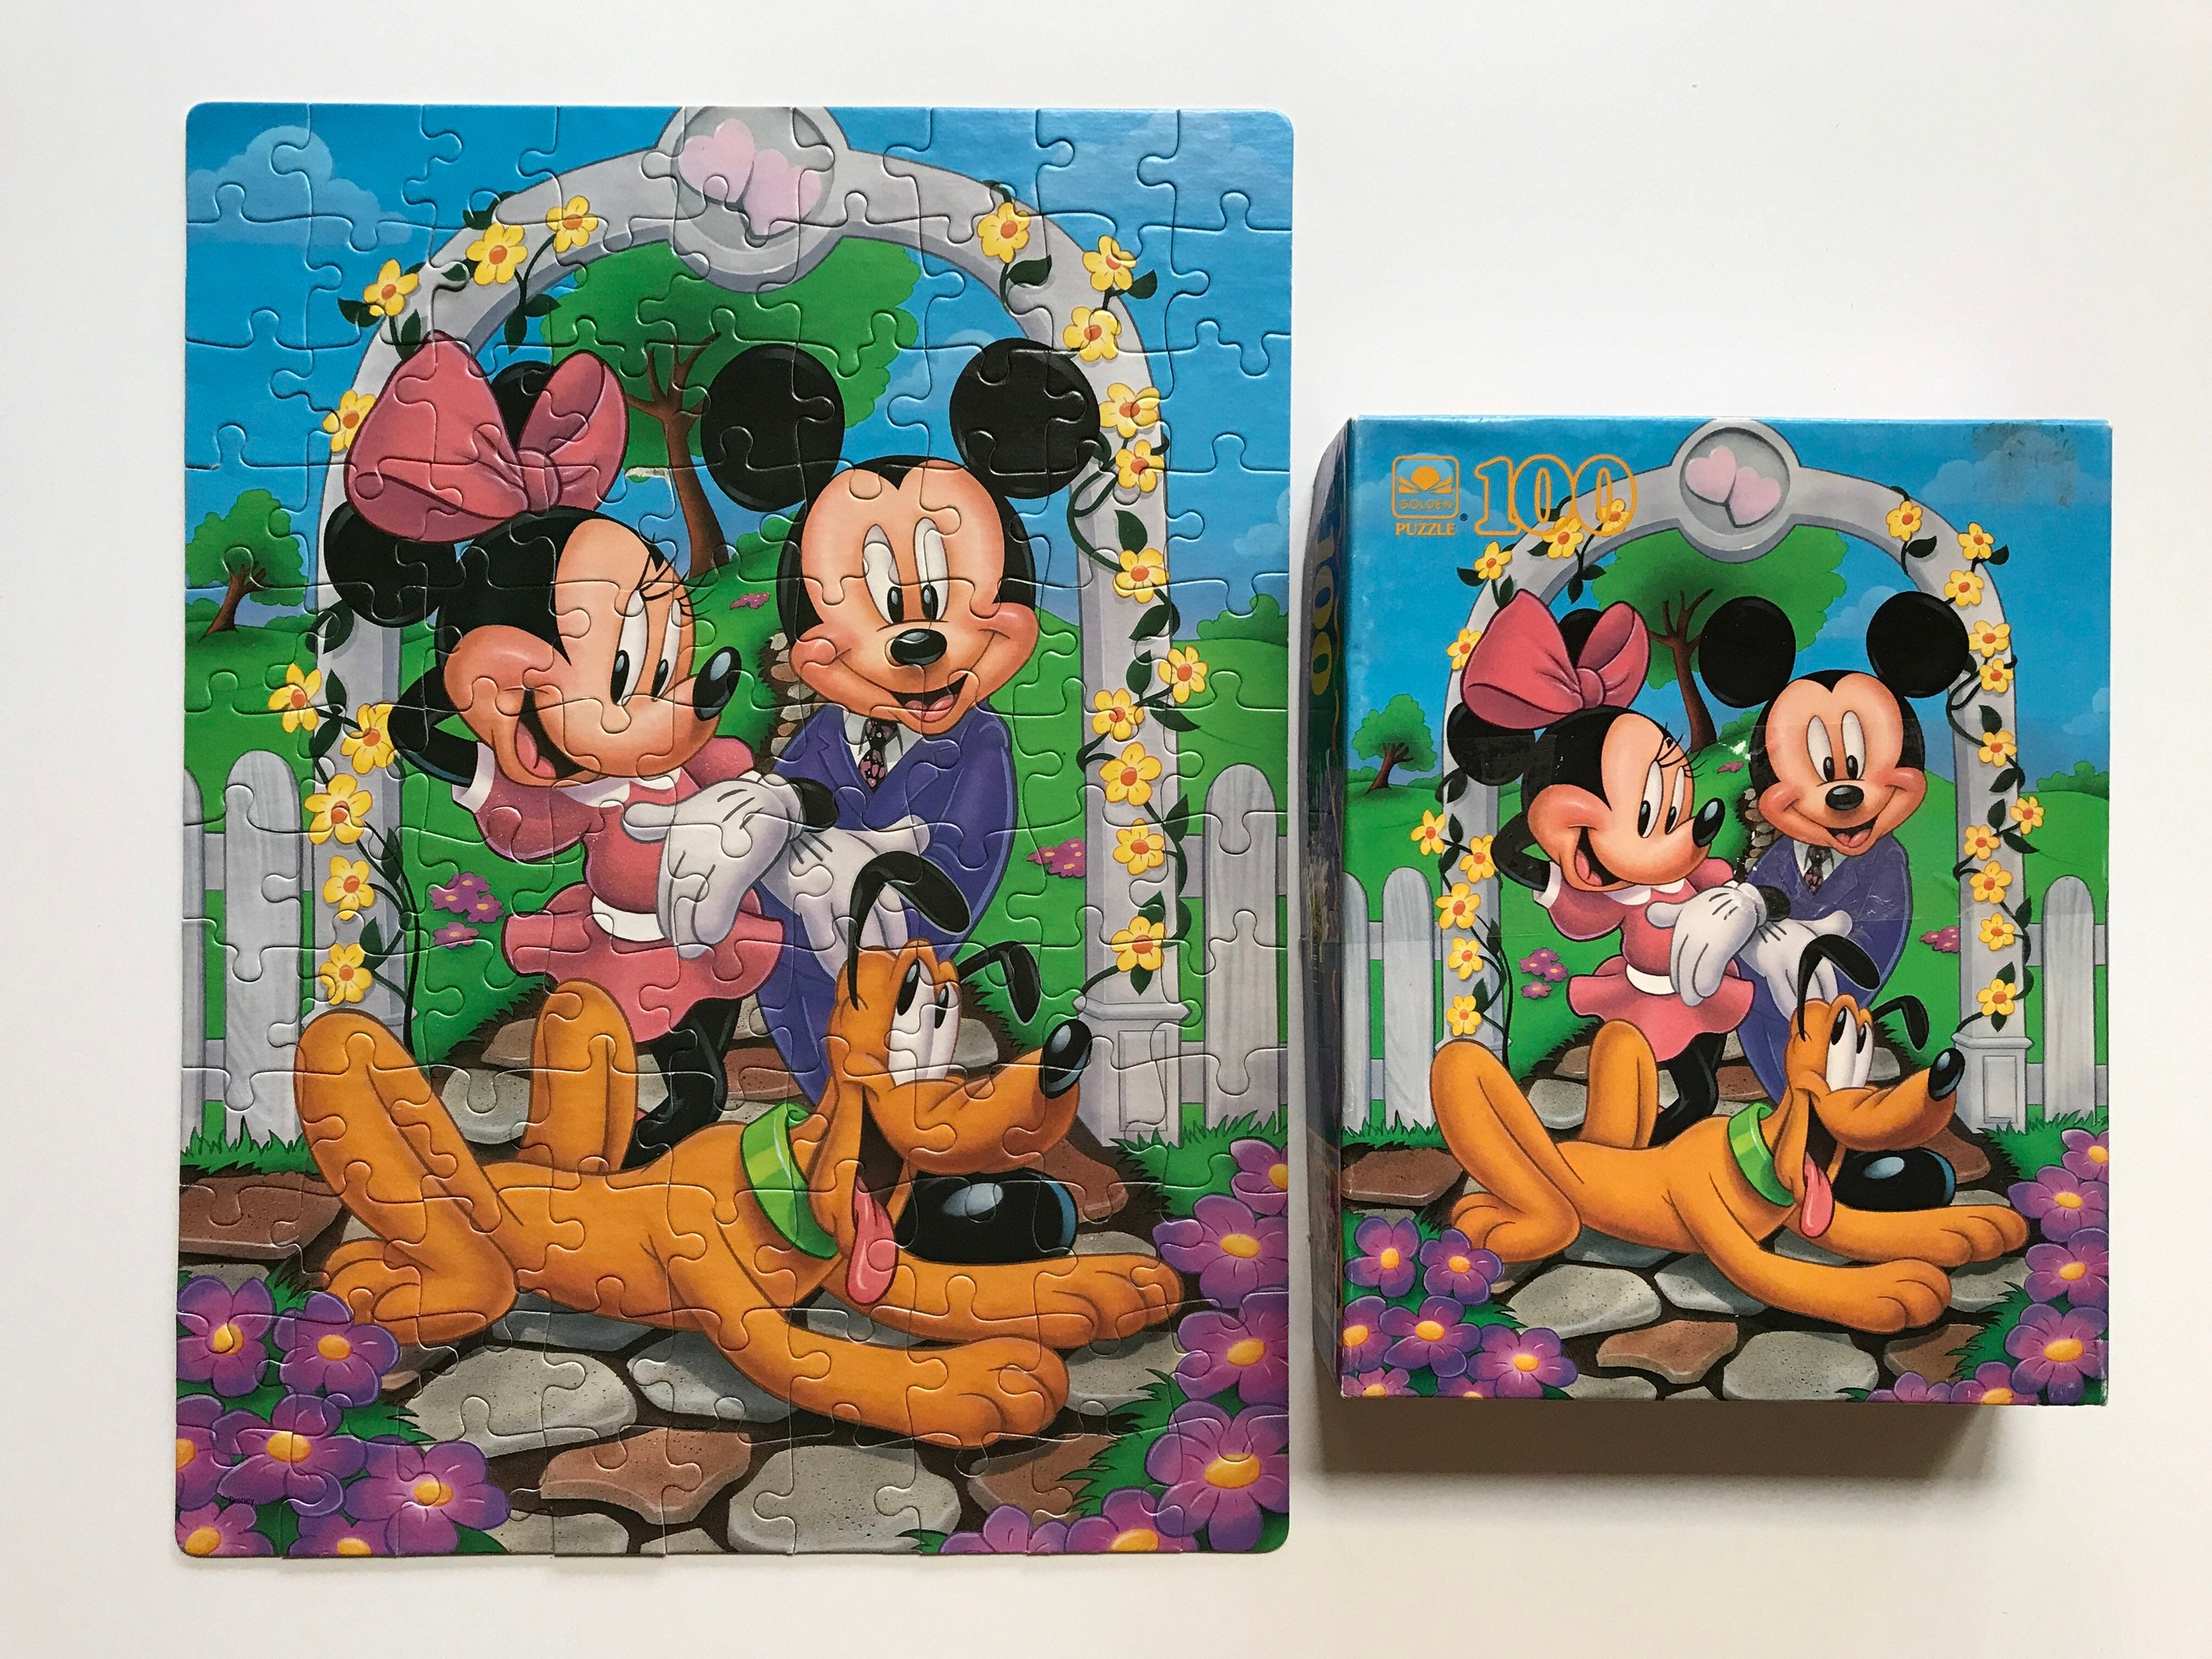 University Games Disney Deluxe Mickey & Minnie Puzzle 